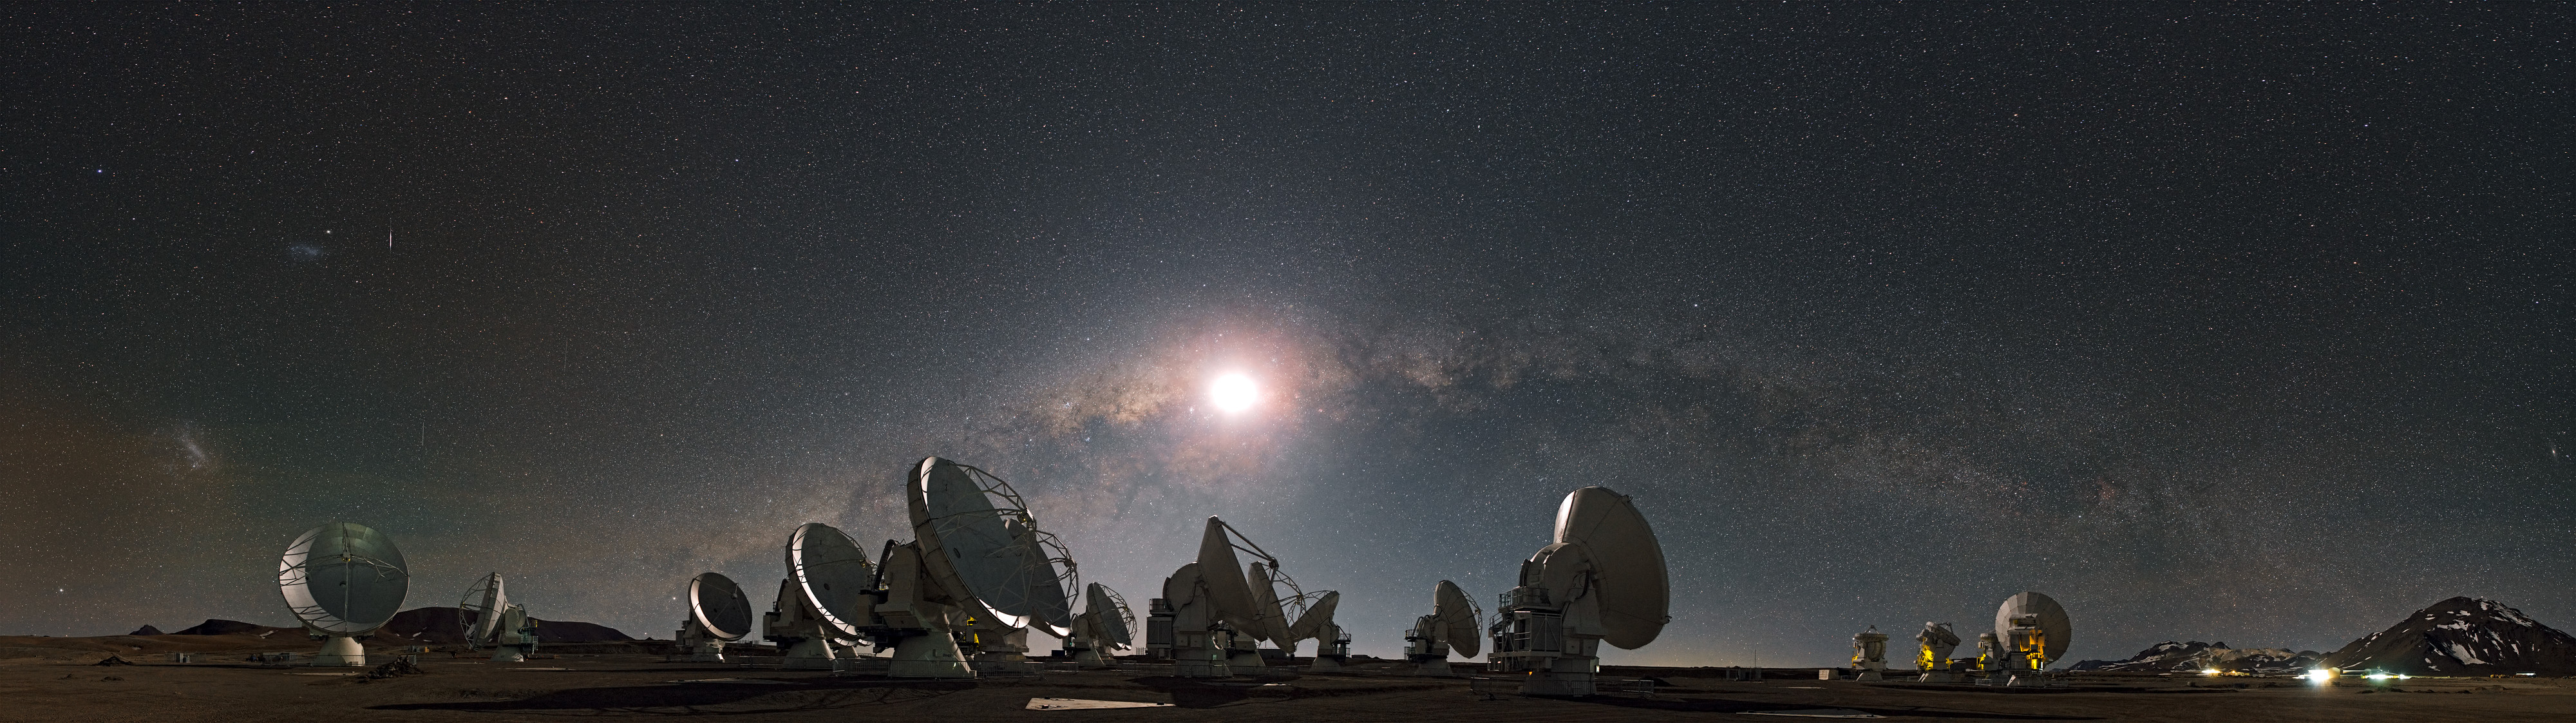 Panorama Panoramas Milky Way Stars Chile Atacama Desert ALMA Observatory Telescope Photography Space 4000x1122